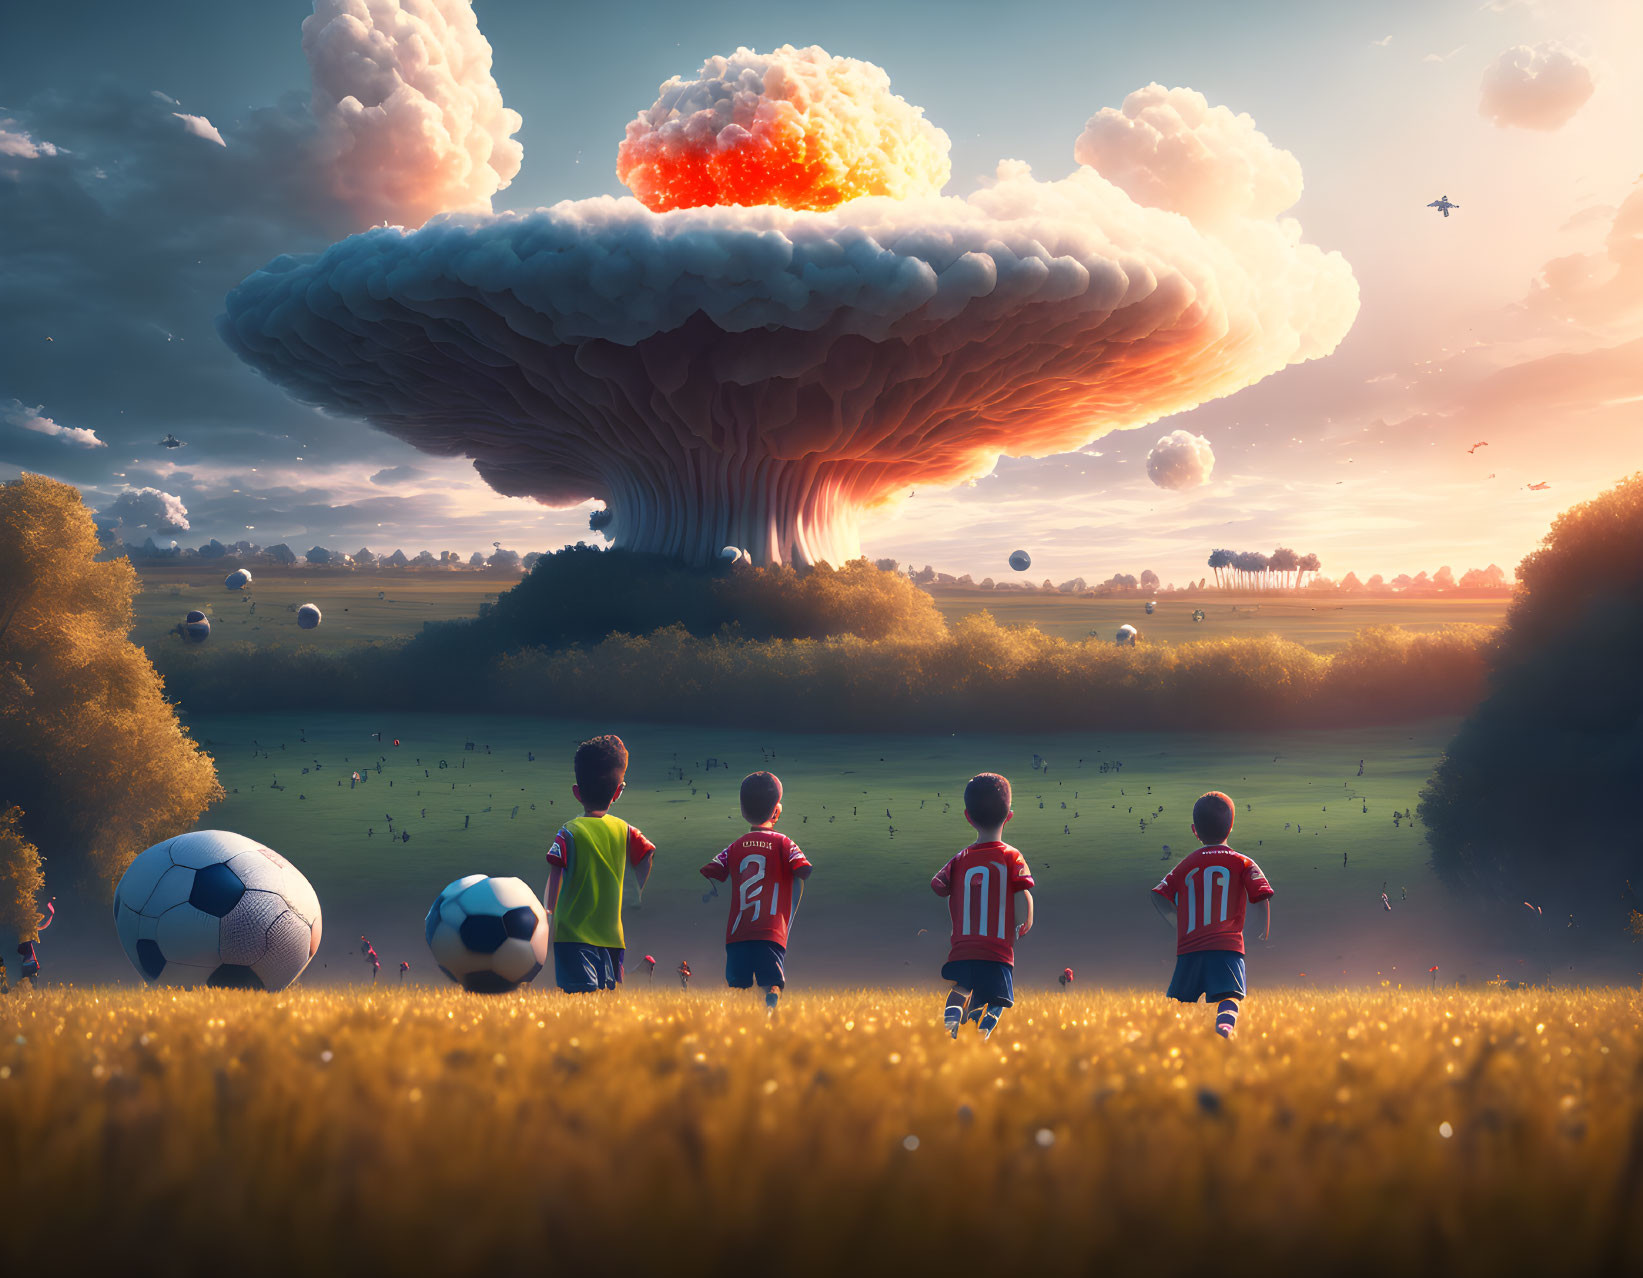 Children in soccer attire witness mushroom cloud explosion at sunset.